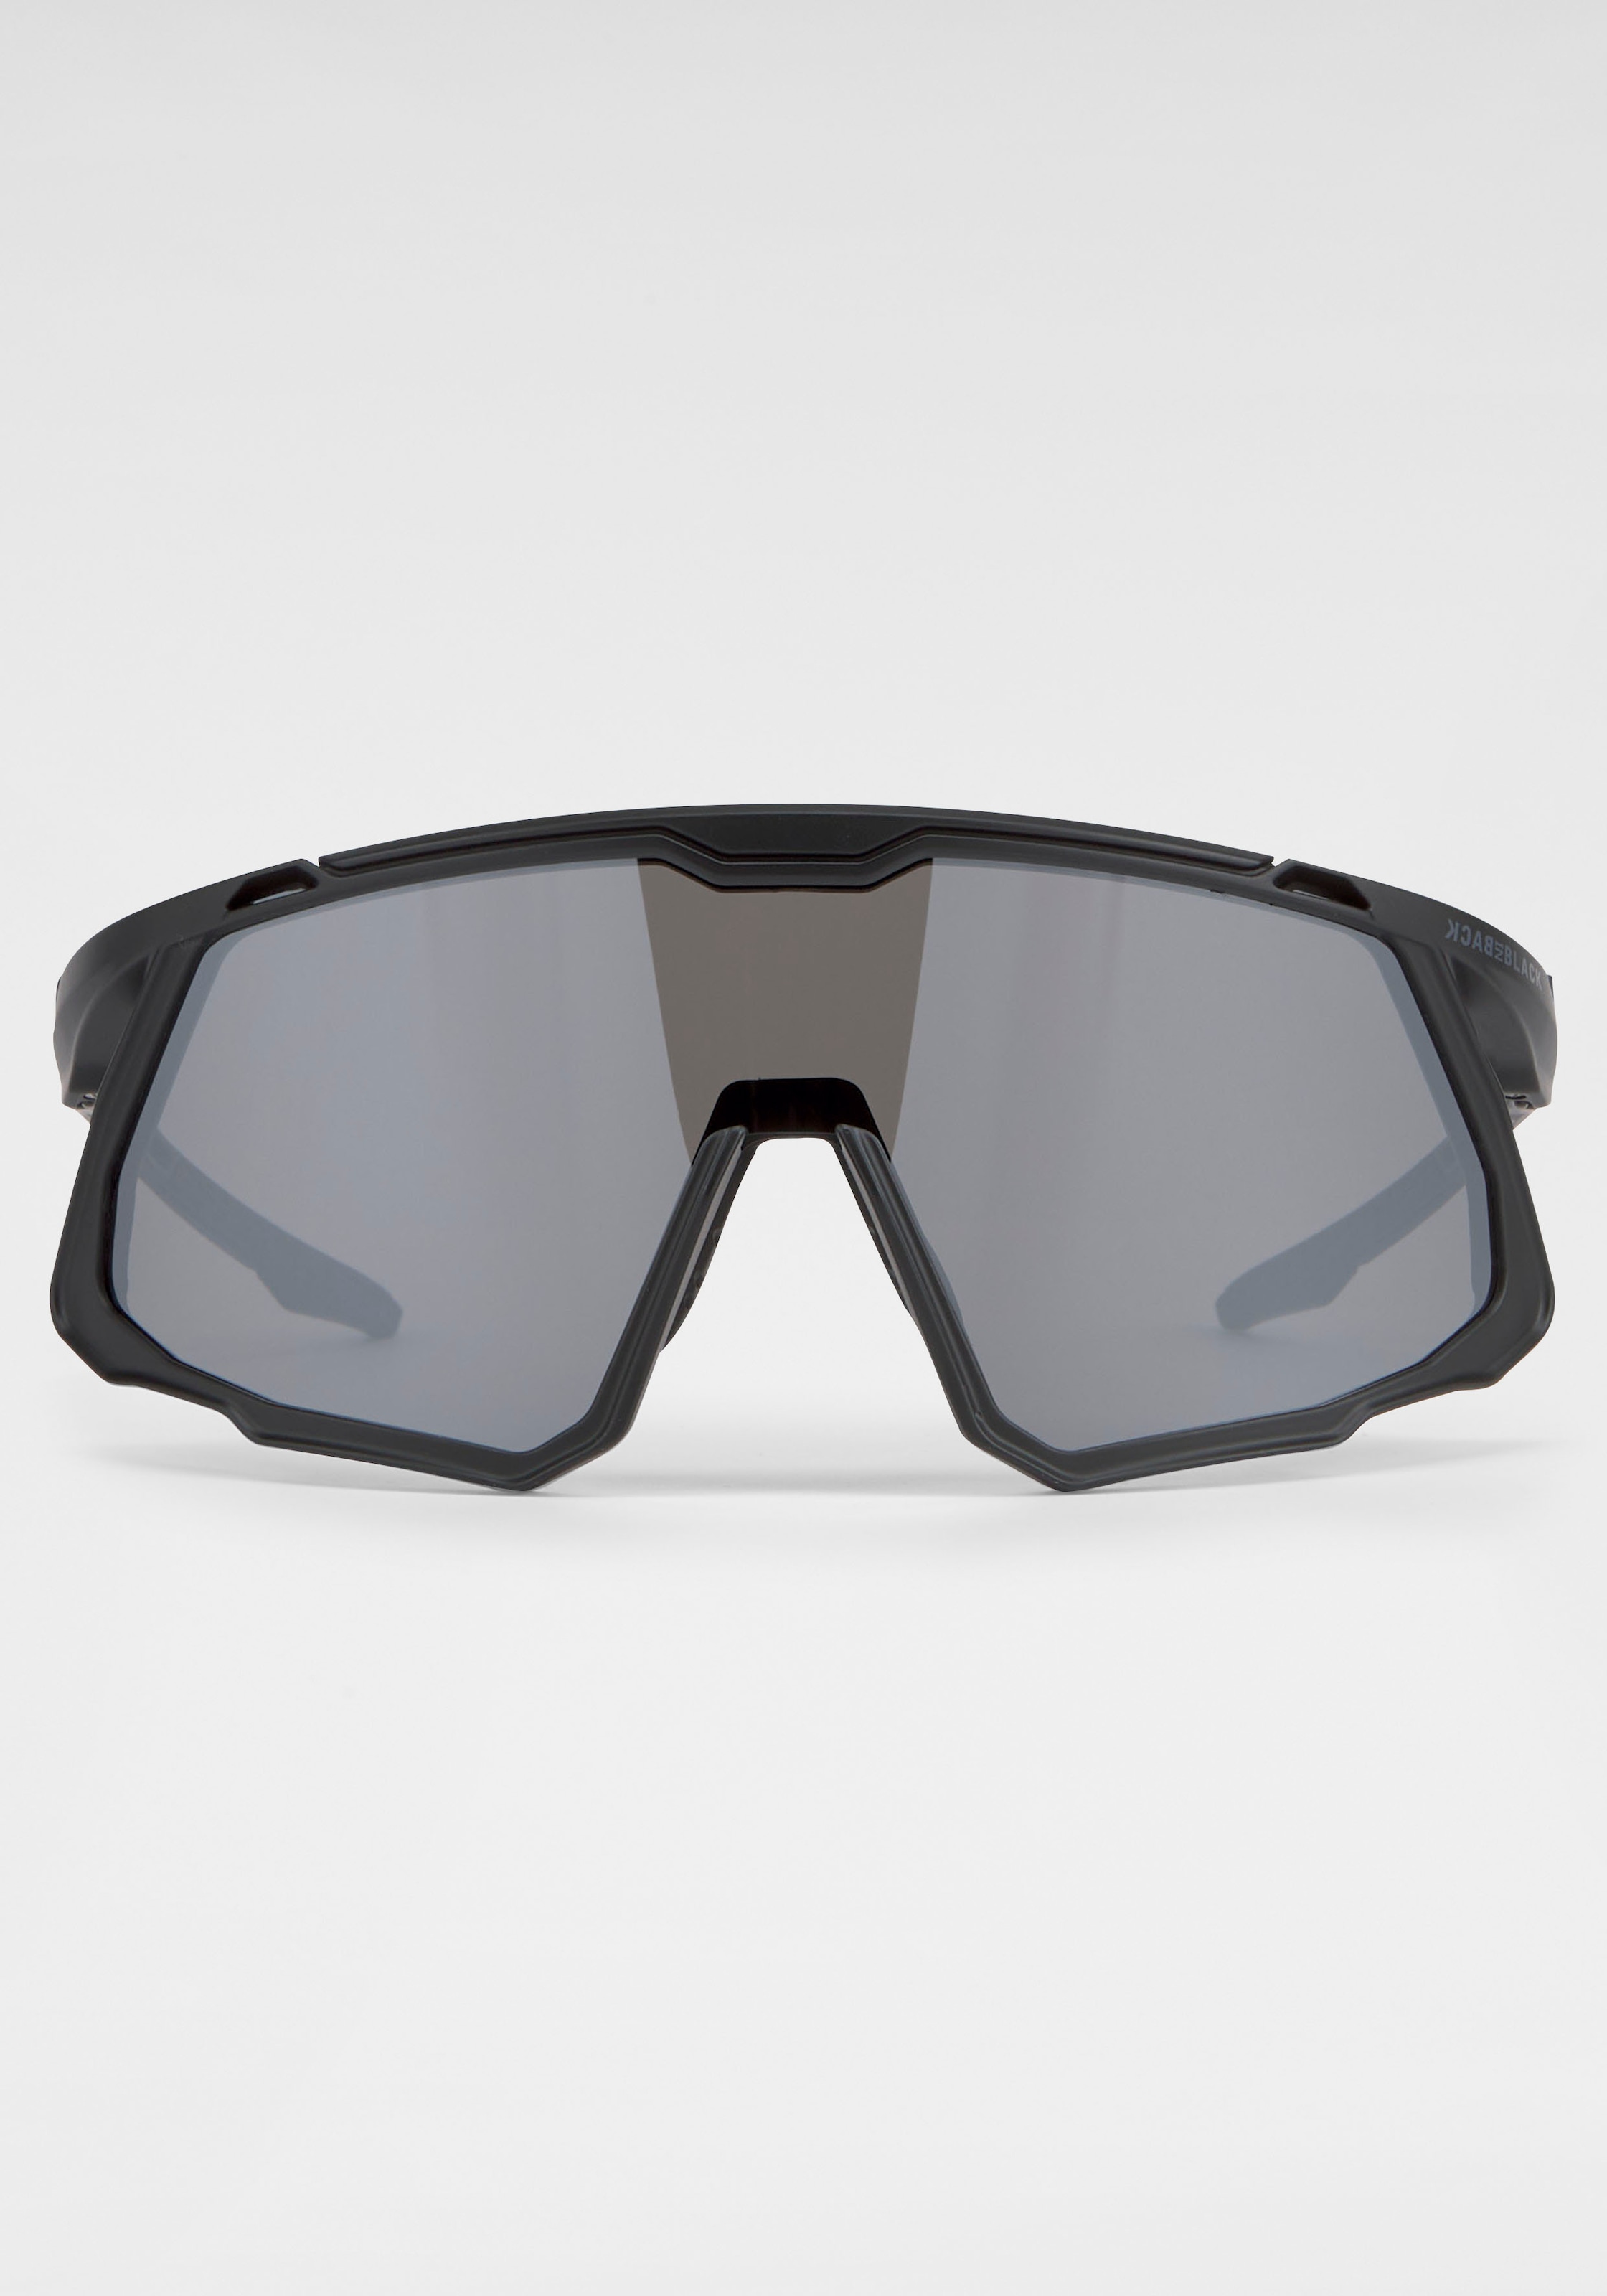 BACK IN BLACK Eyewear Sonnenbrille, gebogene Form online